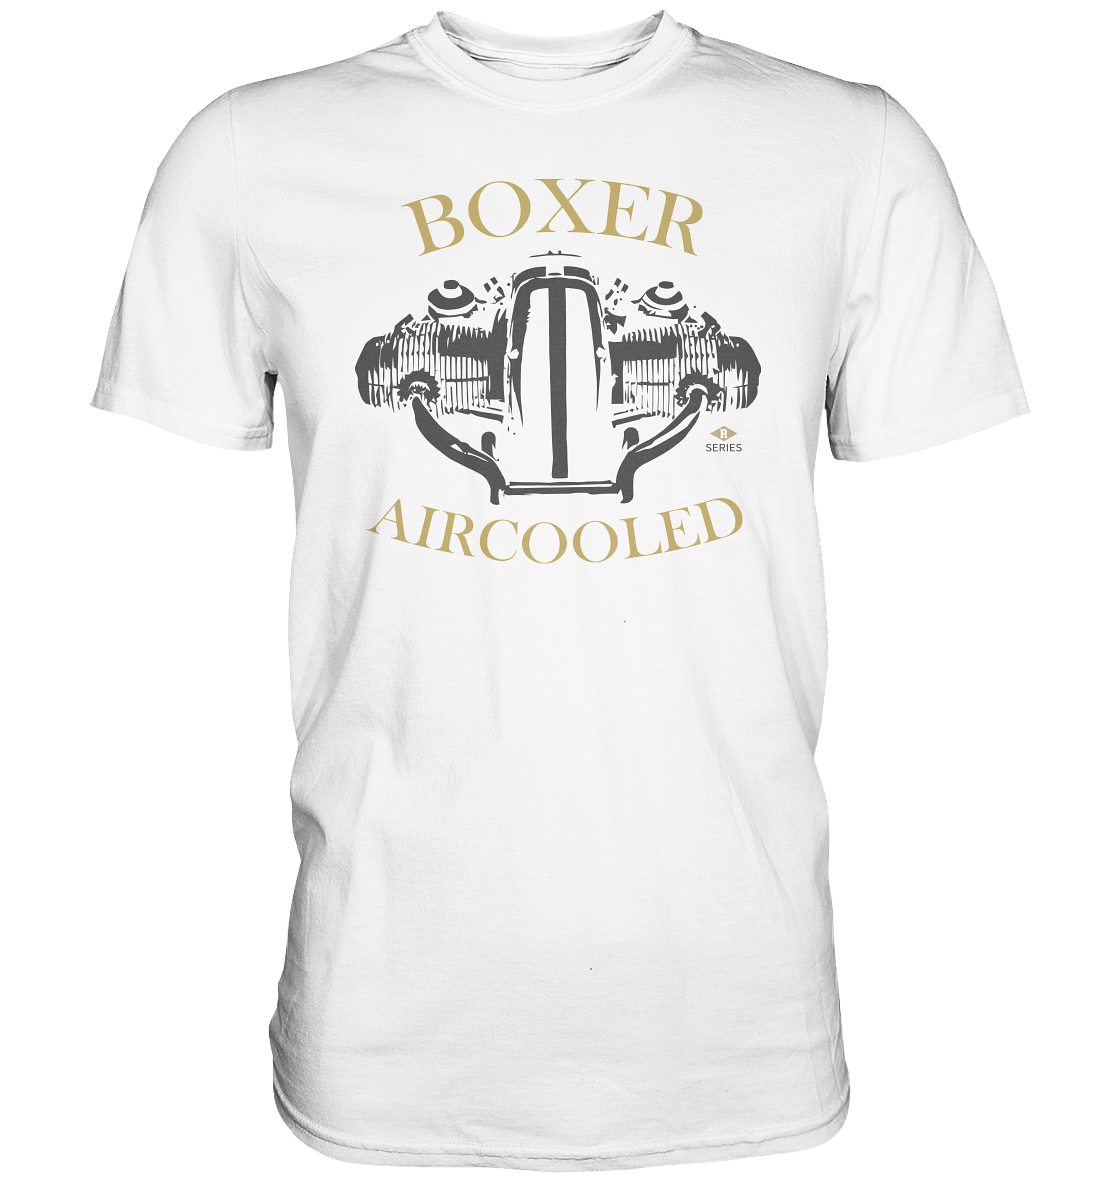 Motiv Boxermotor aircooled - Premium unisex Shirt